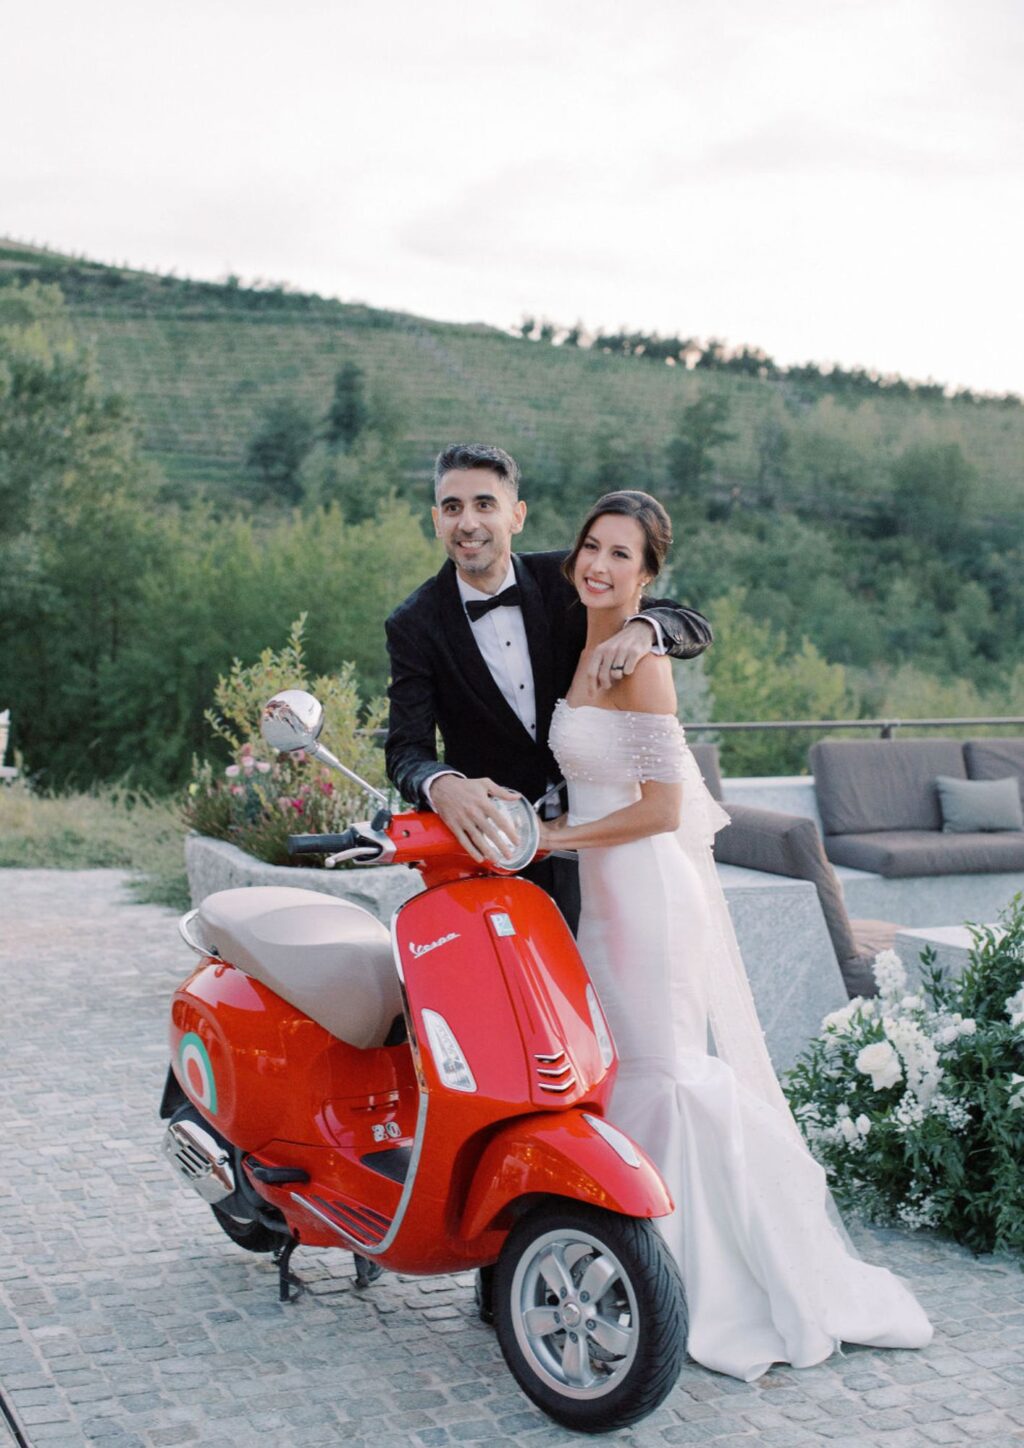 Supplier Spotlight: Italian Wedding Planners Viasario and Co.